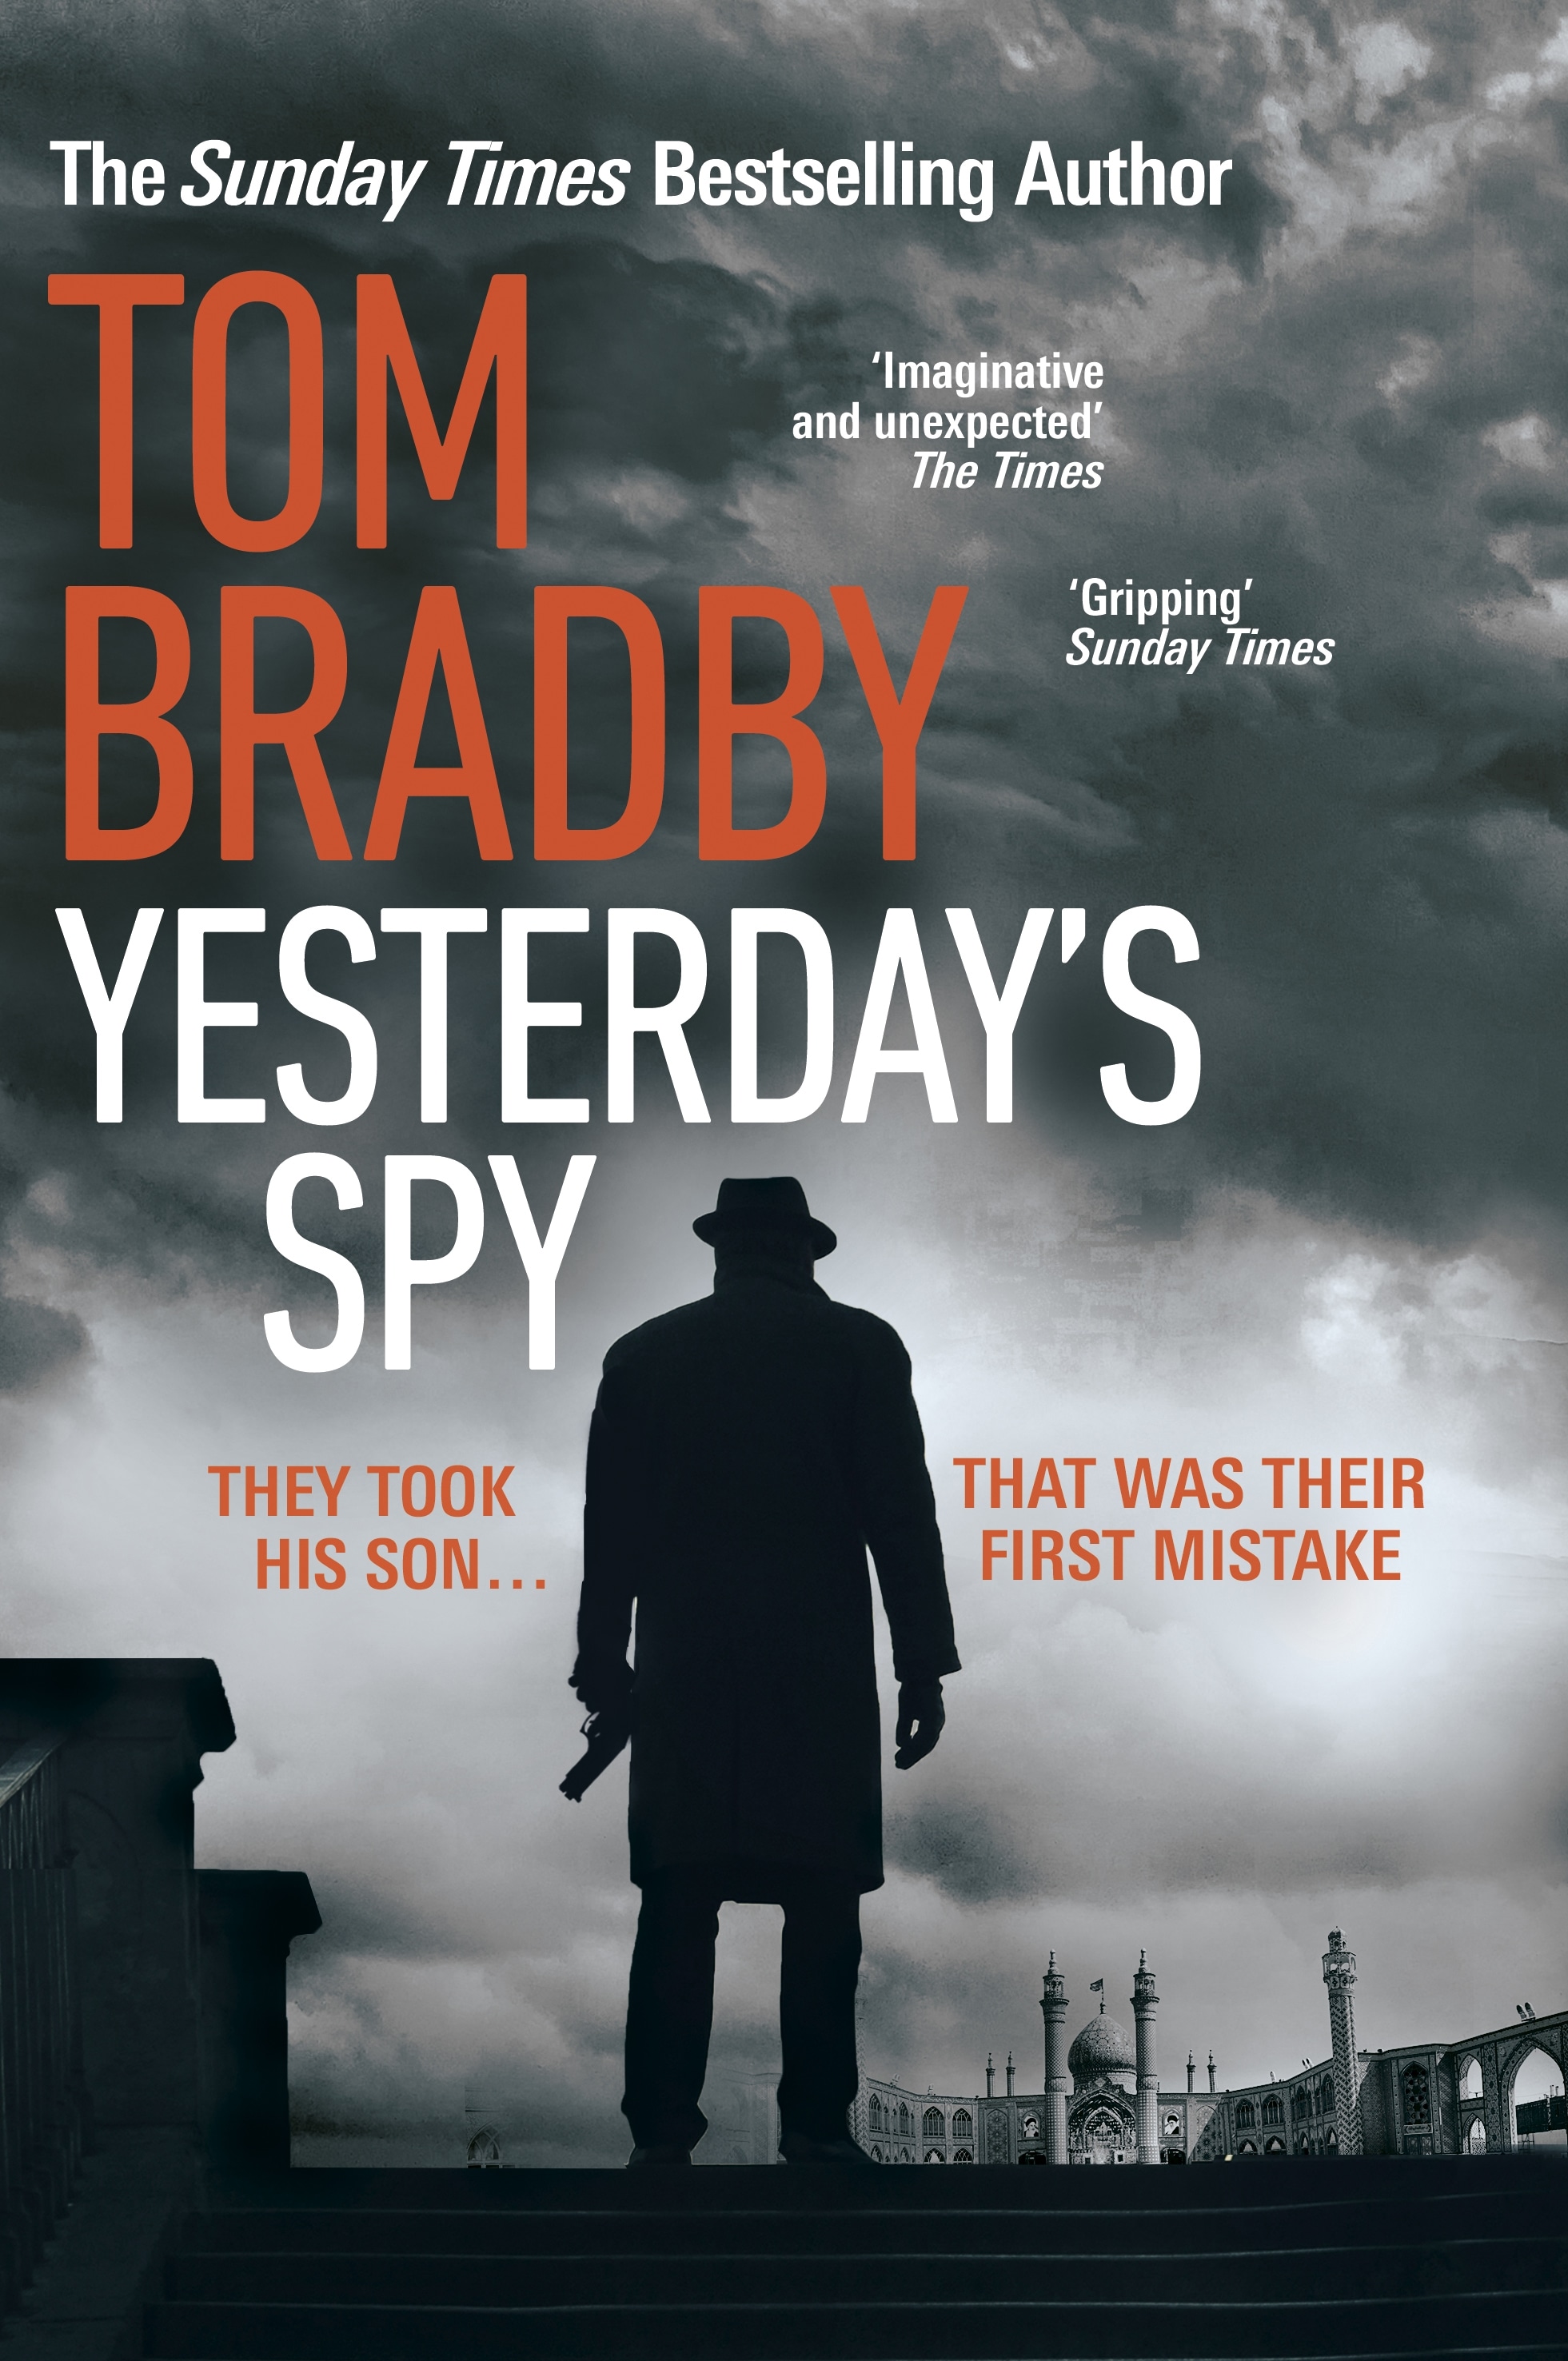 Book “Yesterday's Spy” by Tom Bradby — May 26, 2022